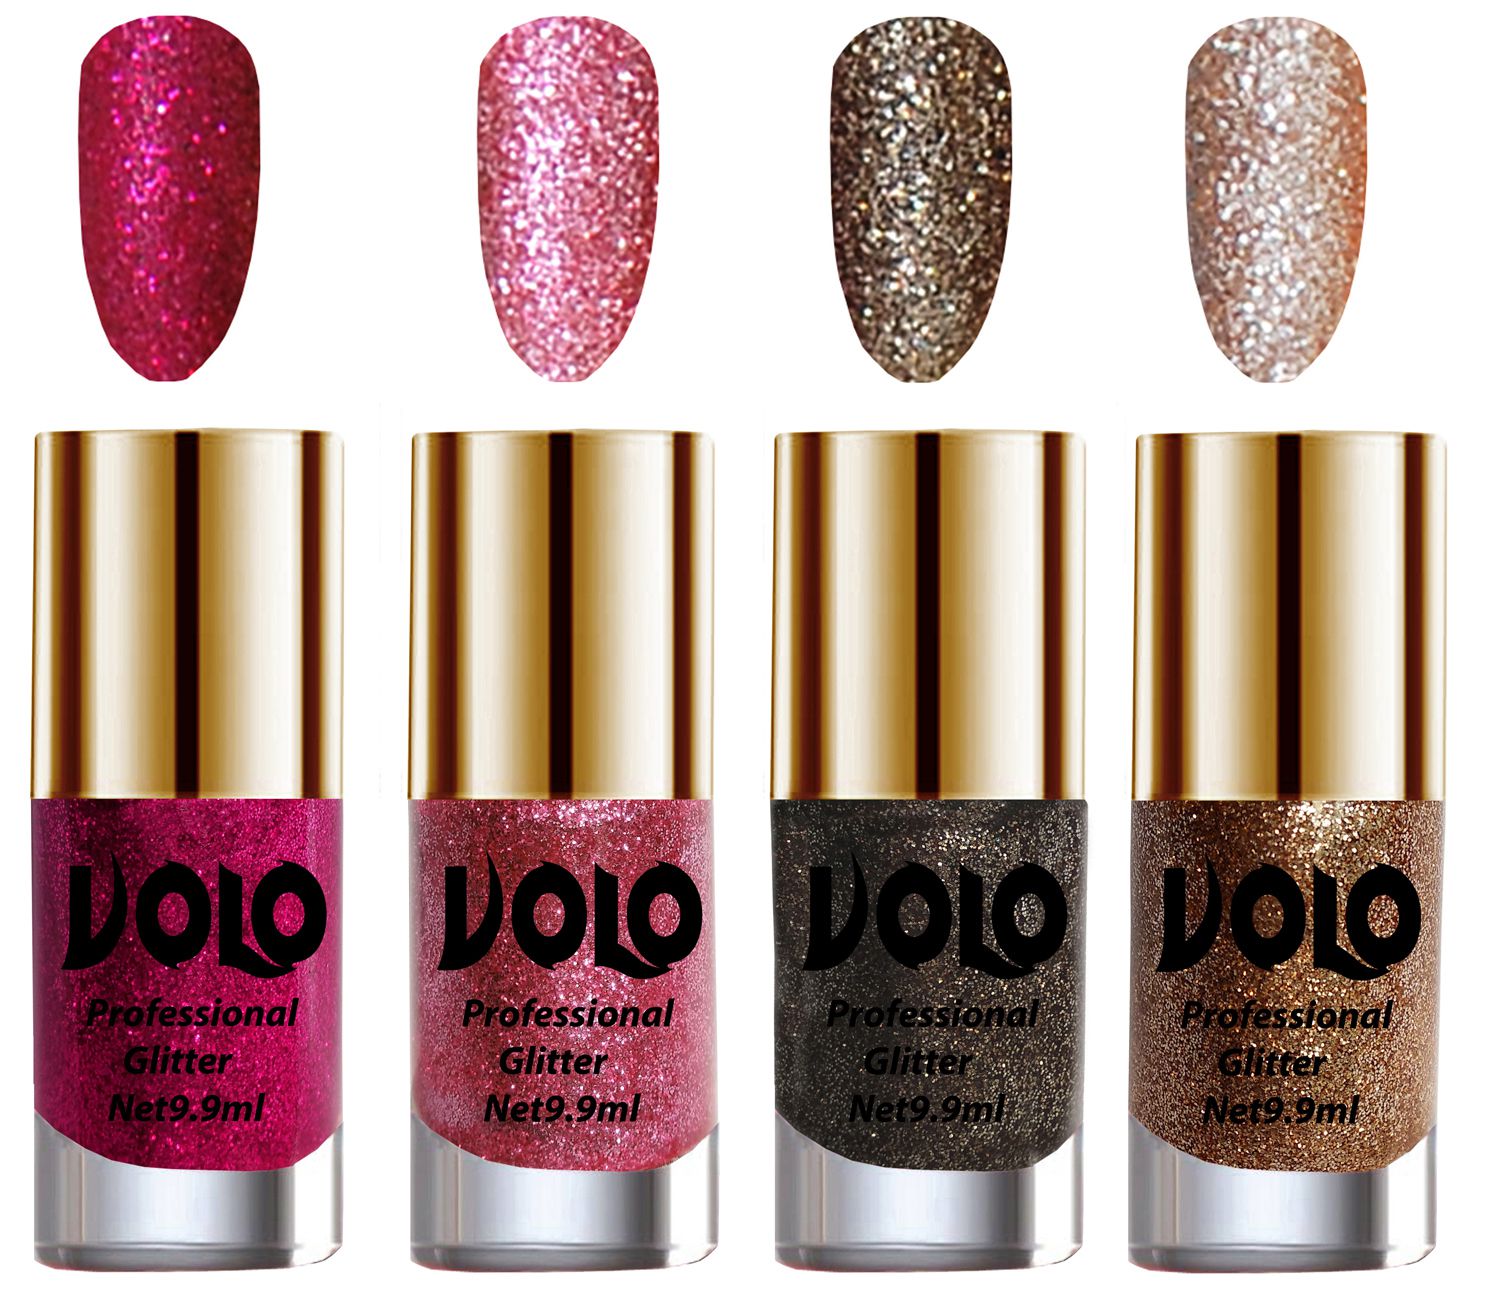     			VOLO Professionally Used Glitter Shine Nail Polish Magenta,Pink,Grey Gold Pack of 4 39 mL